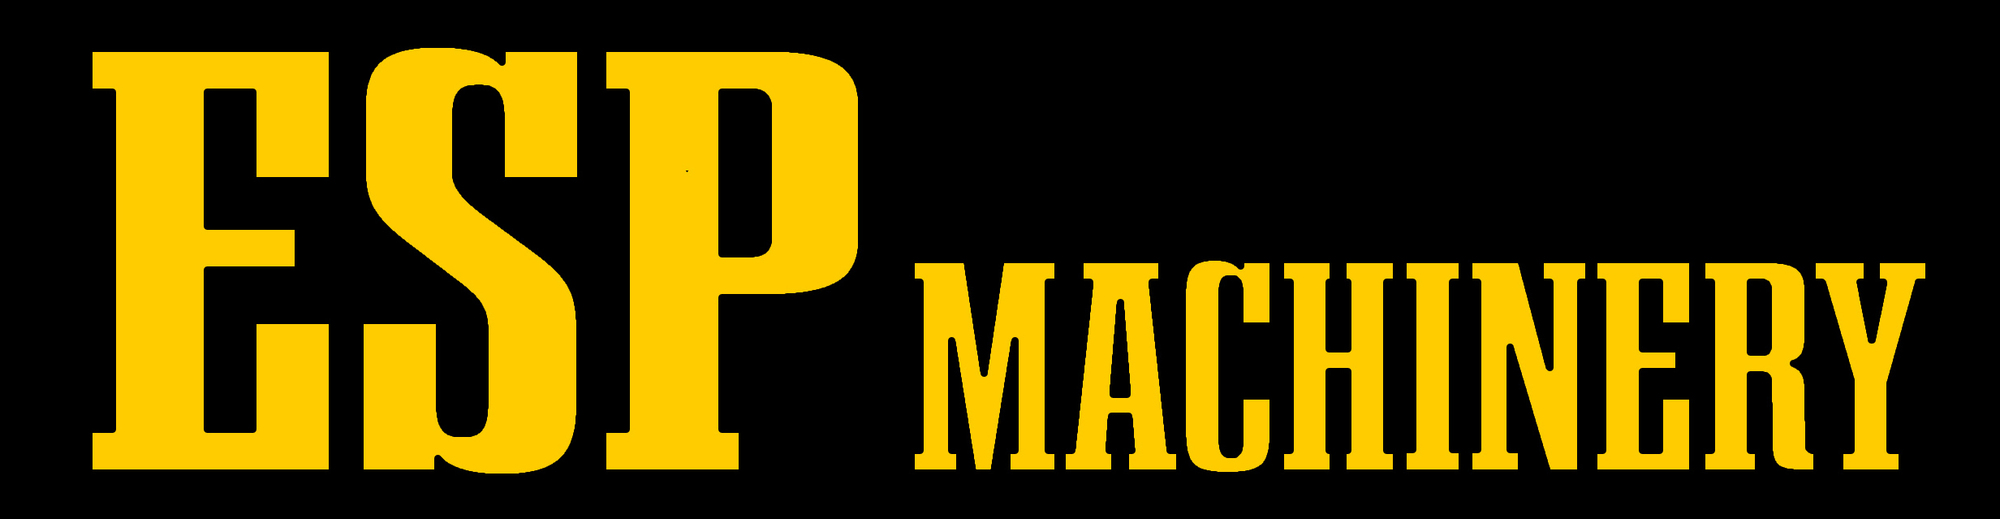 ESP Machinery Australia Pty Ltd Logo